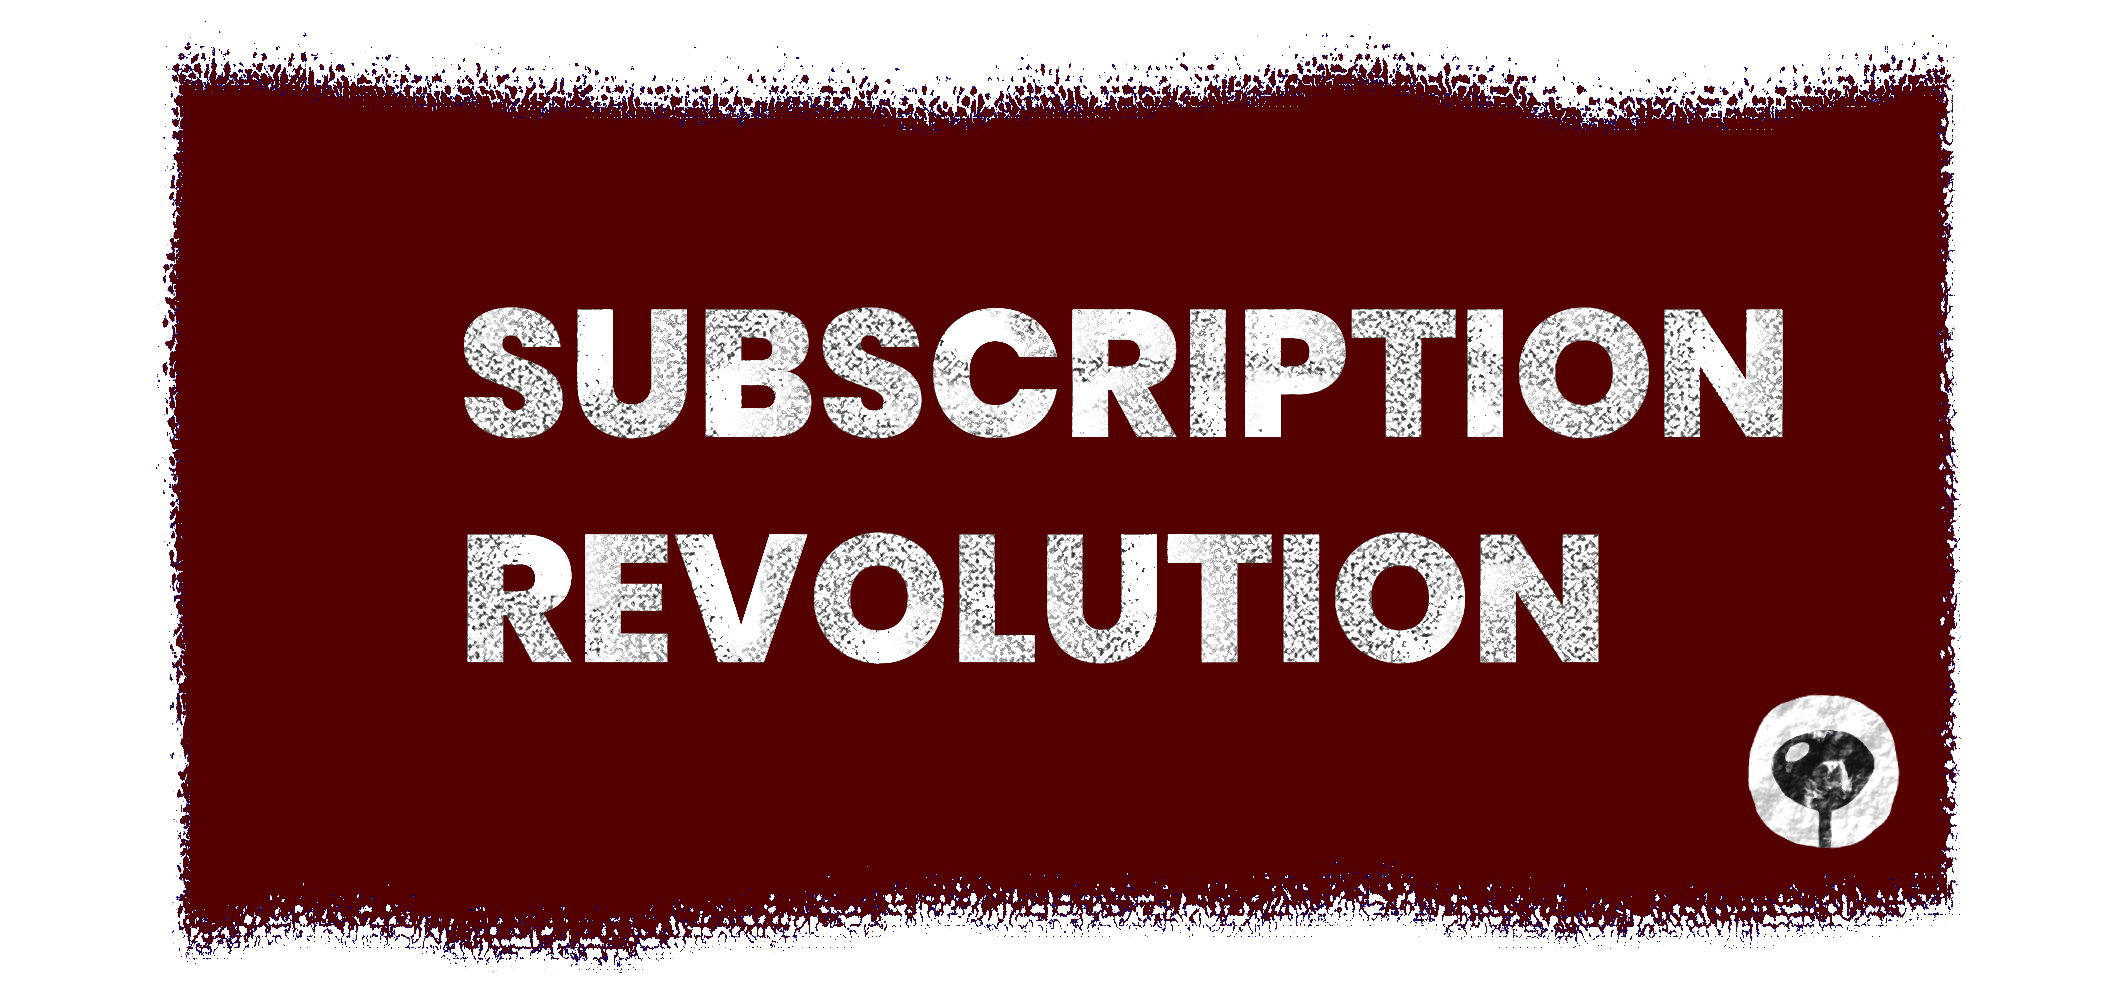 The Subscription Revolution